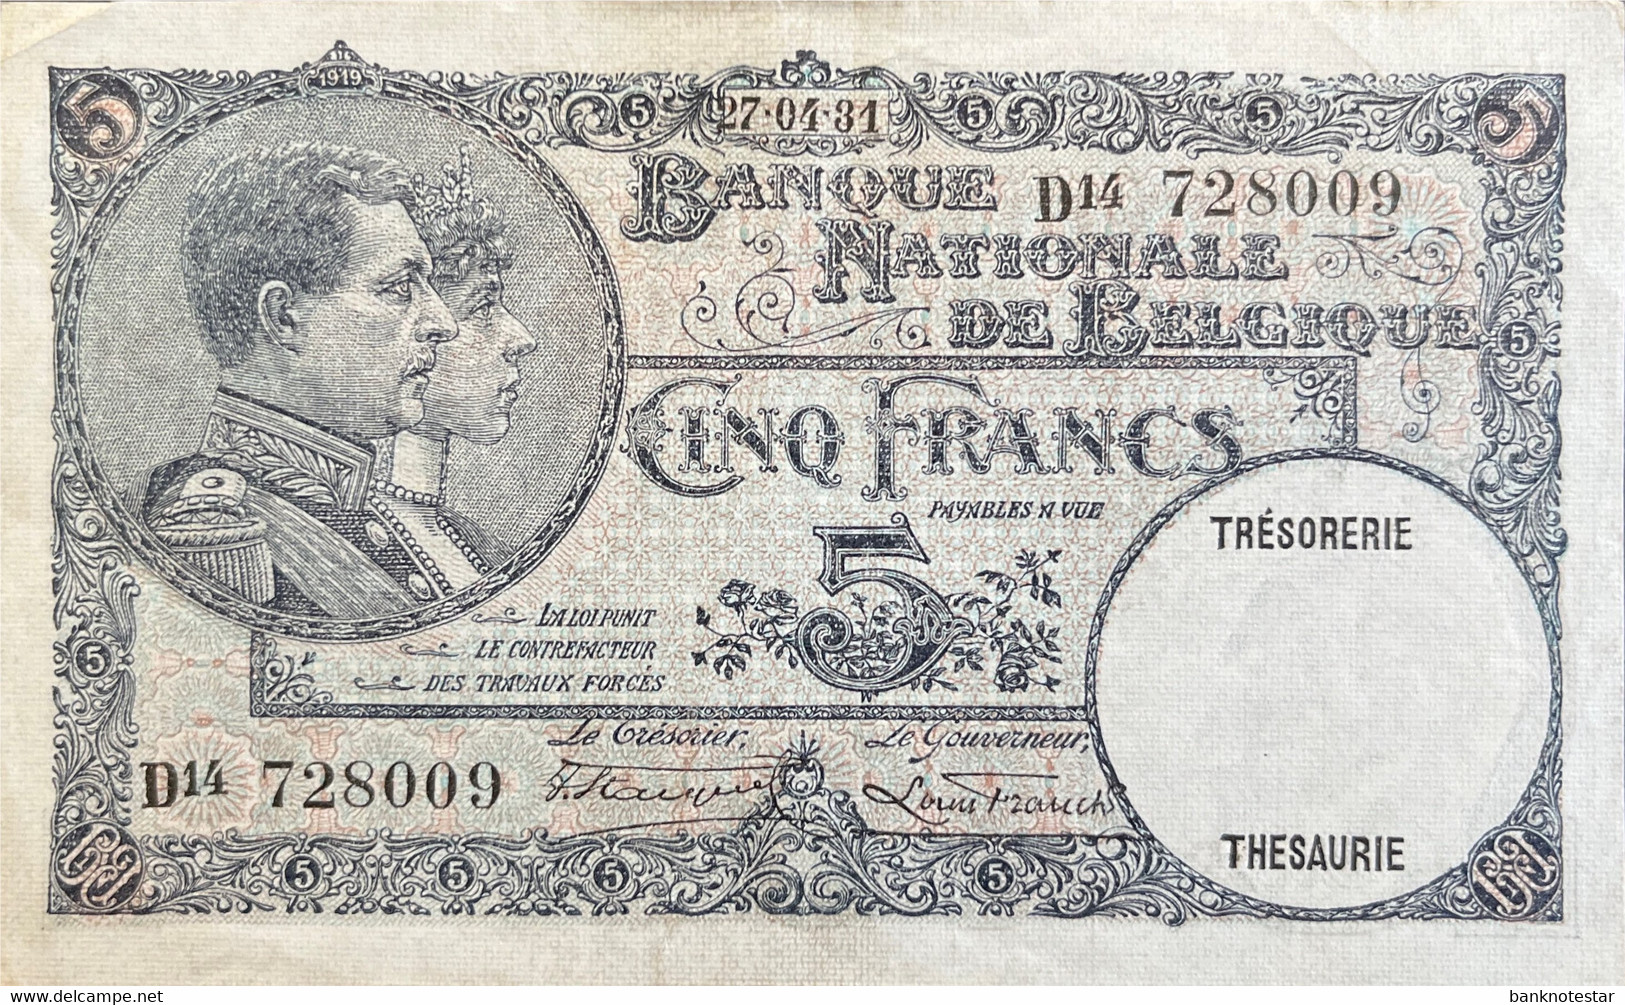 Belgium 5 Francs, P-97 (27.04.1931) - Extremely Fine - 5 Francs